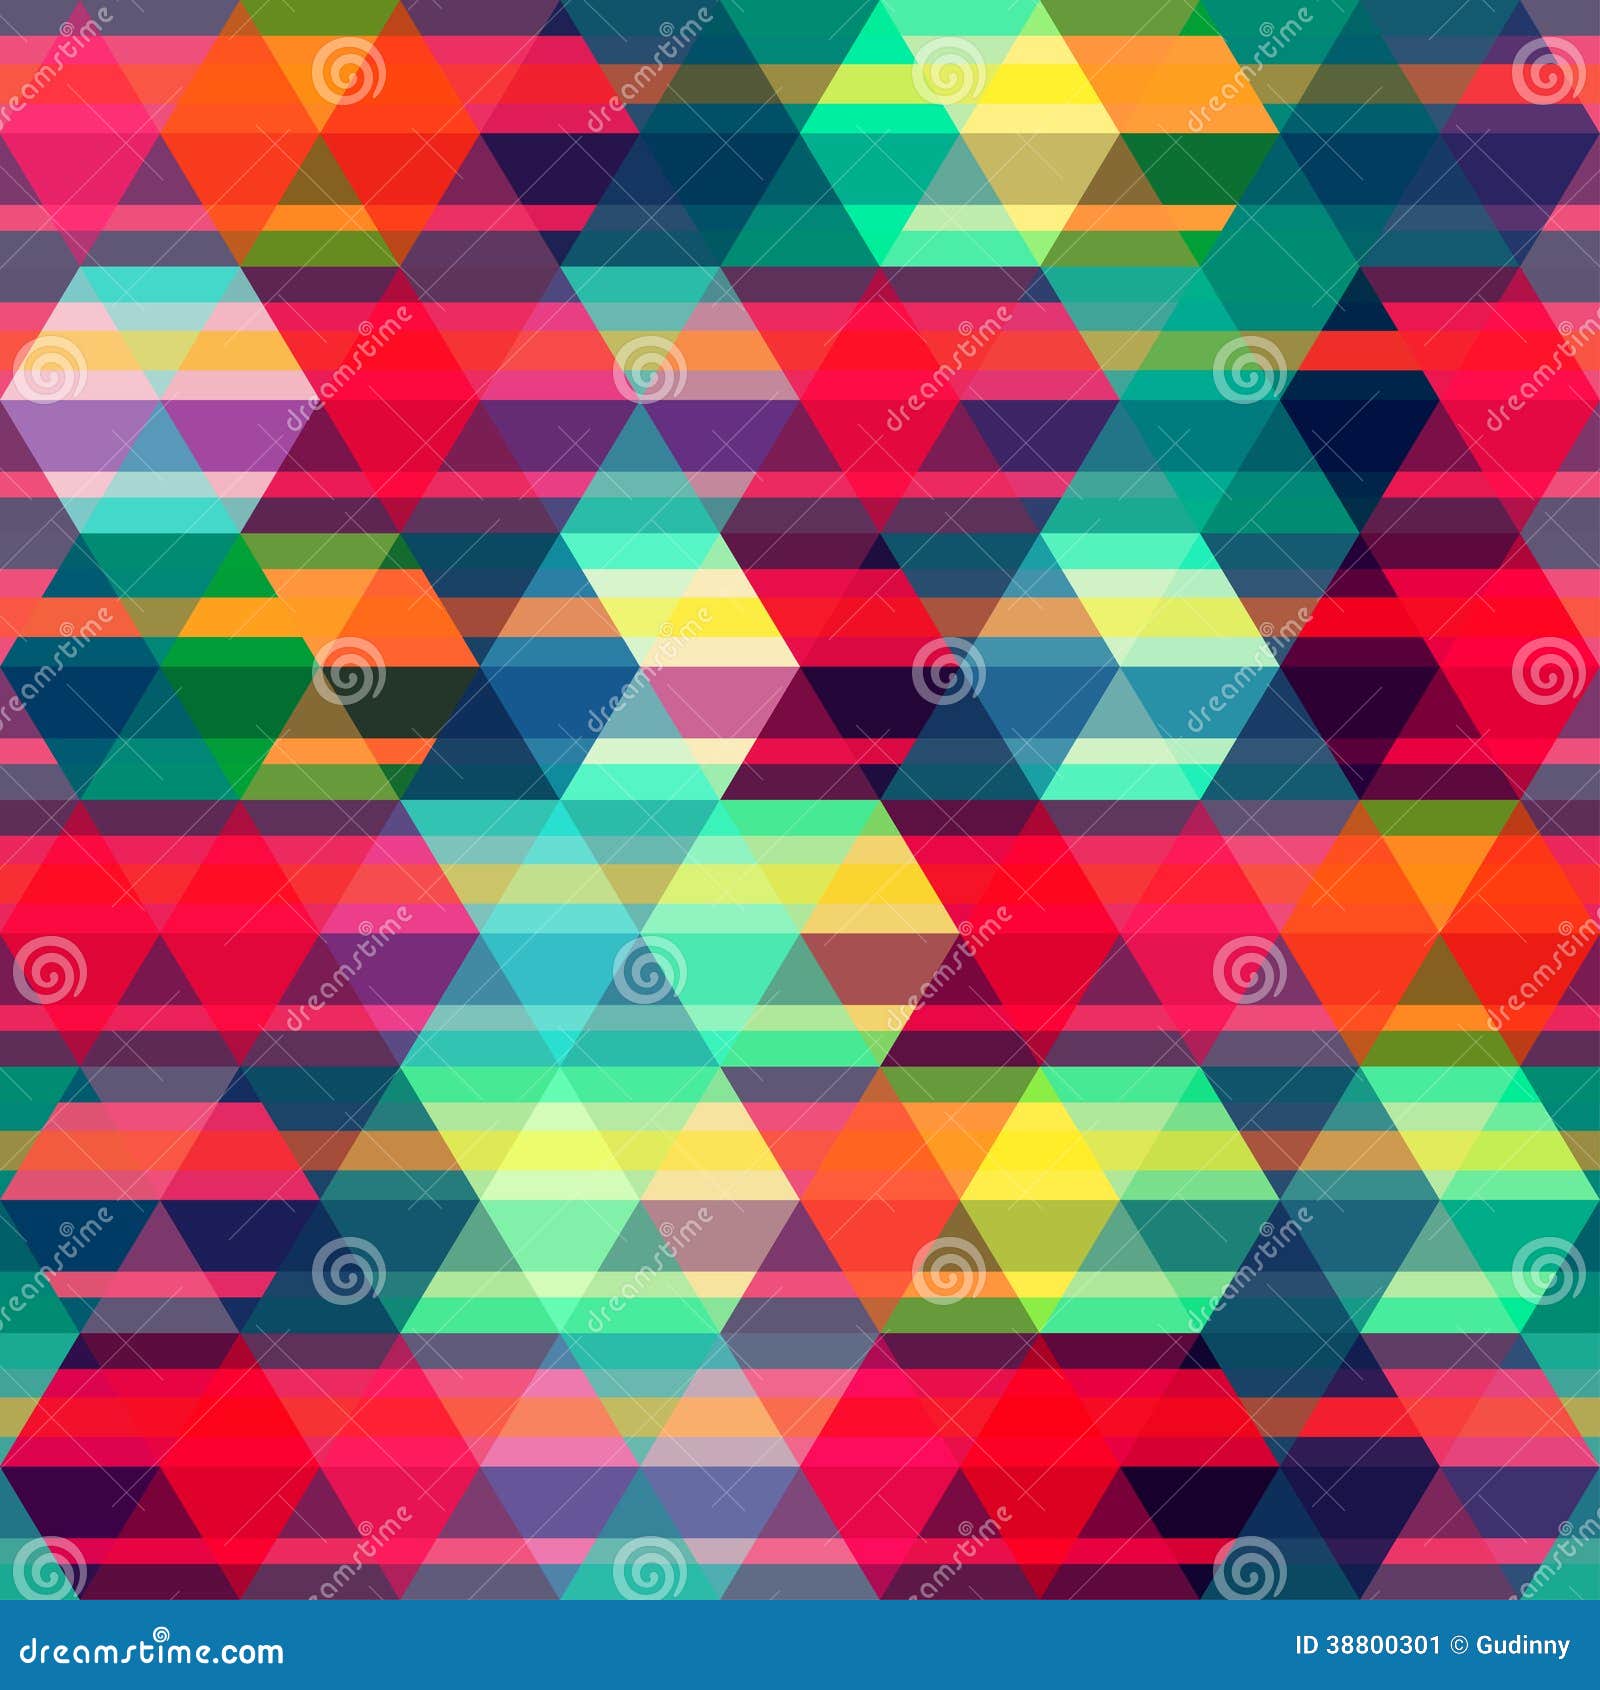 red rhombus seamless pattern